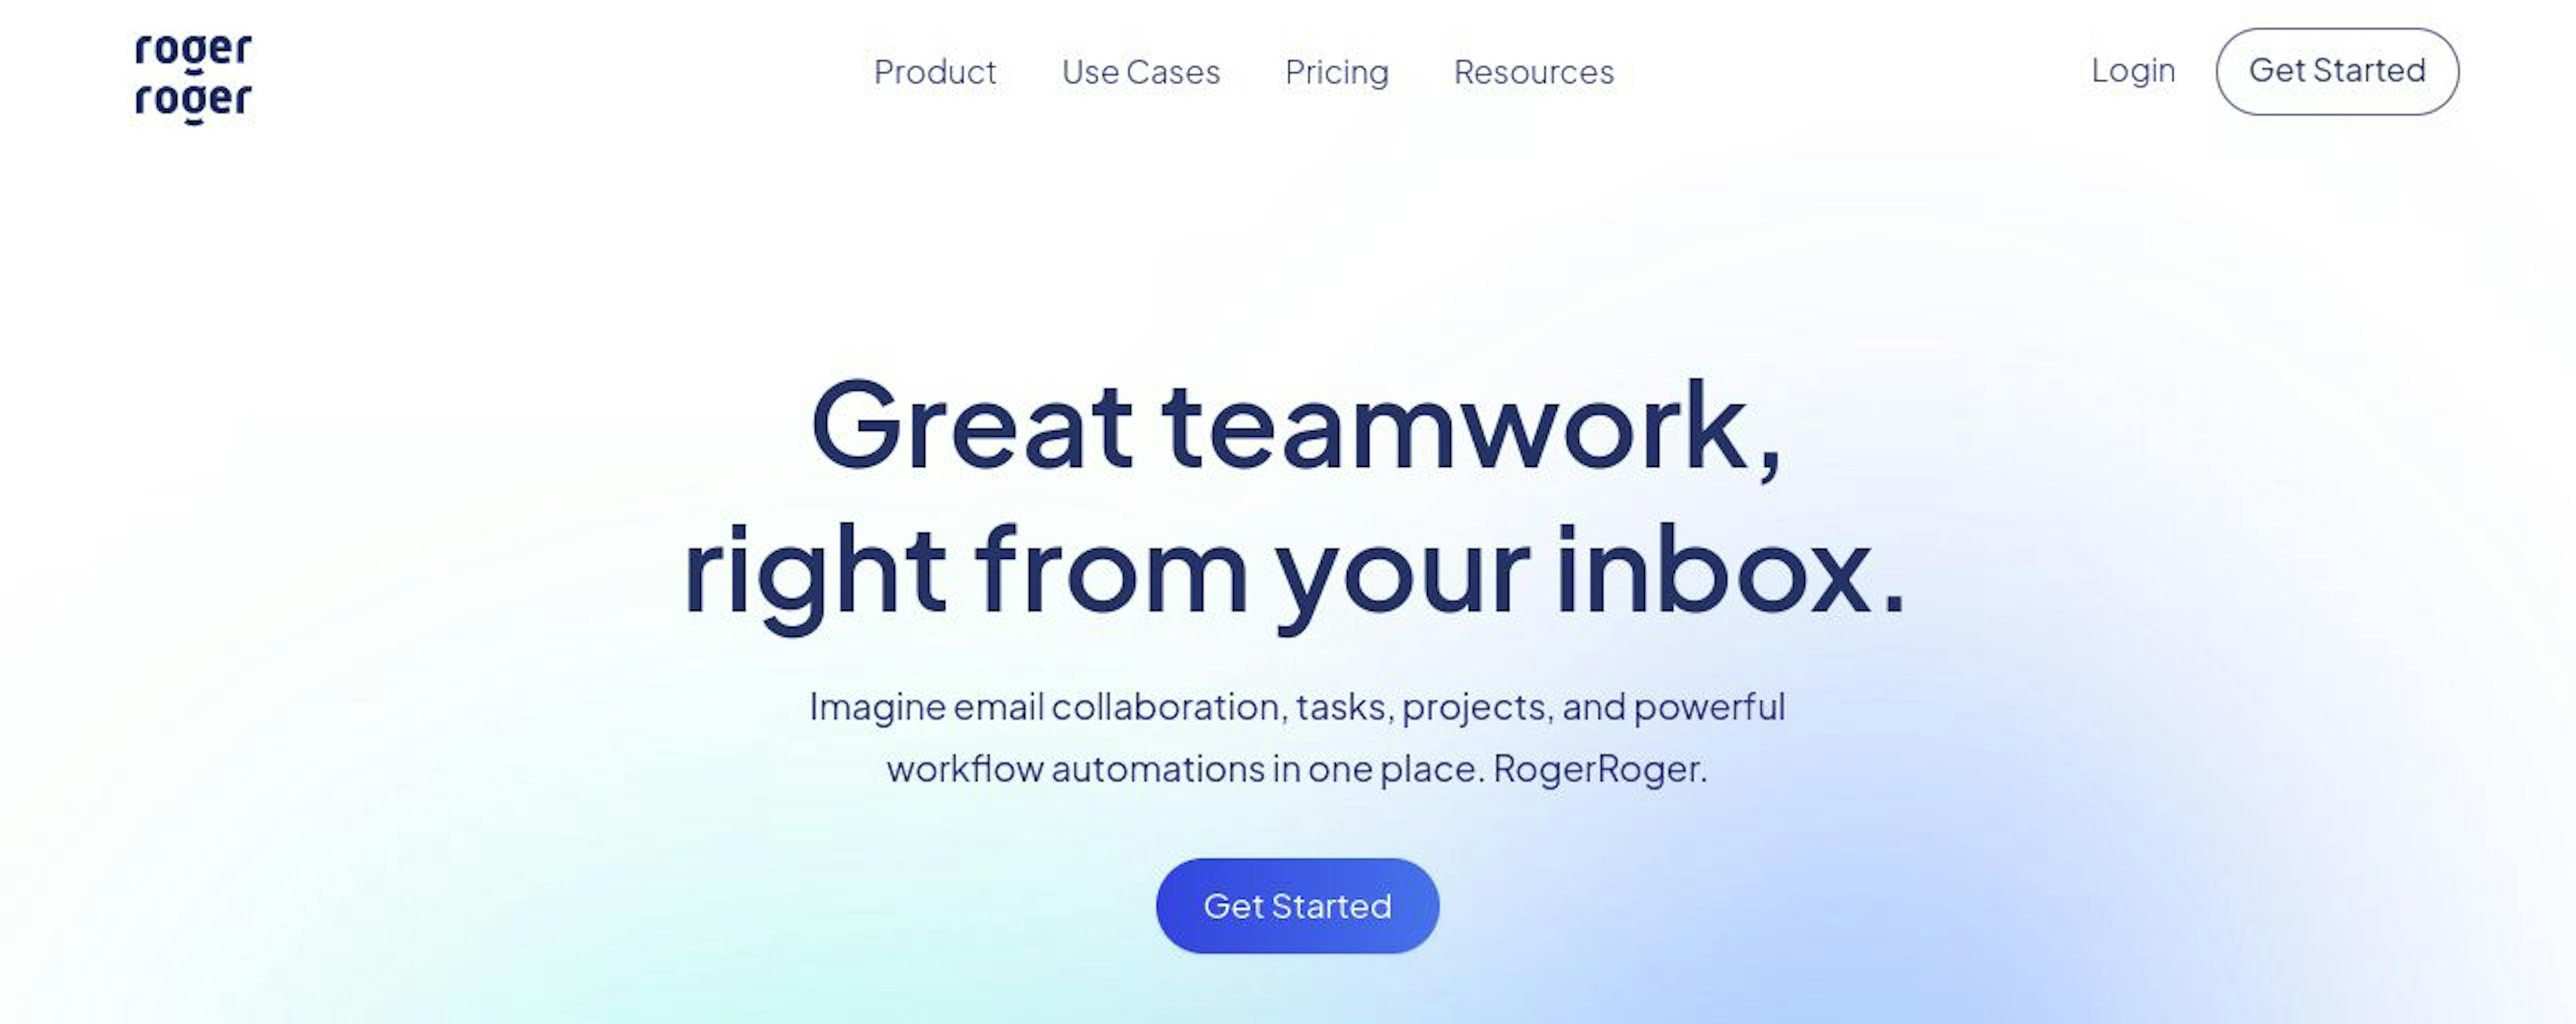 RogerRoger home page